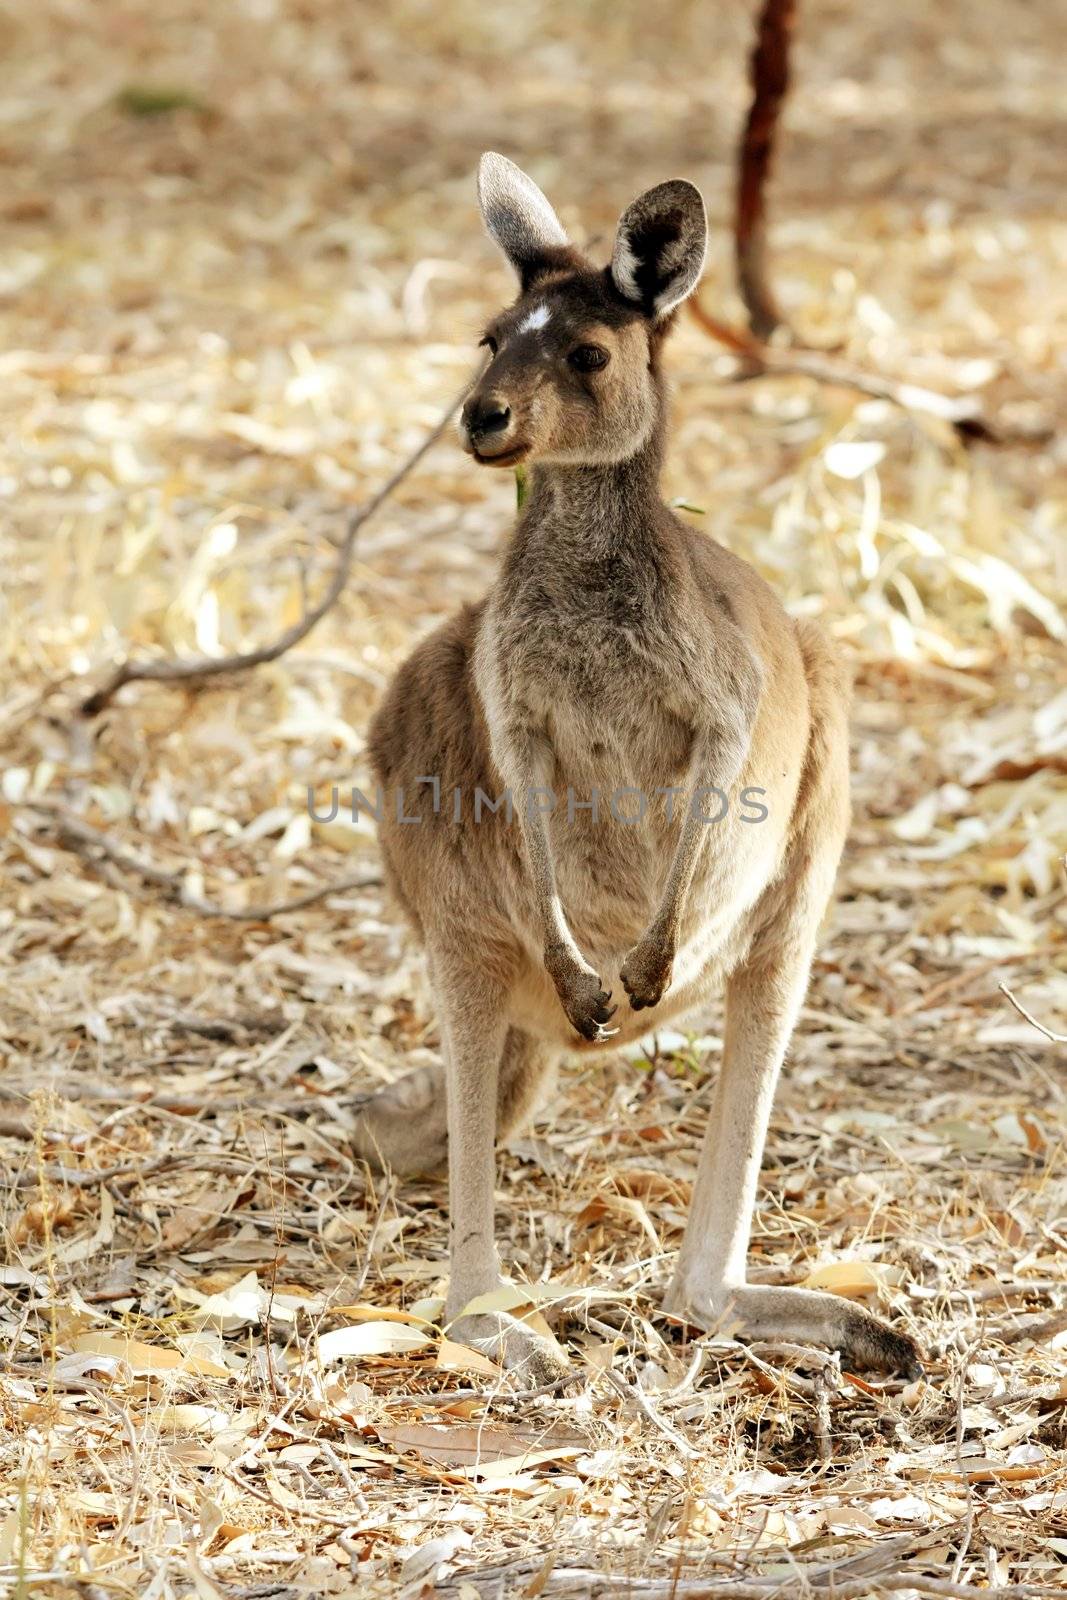 Cute Young Kangaroo Taken in the Wild